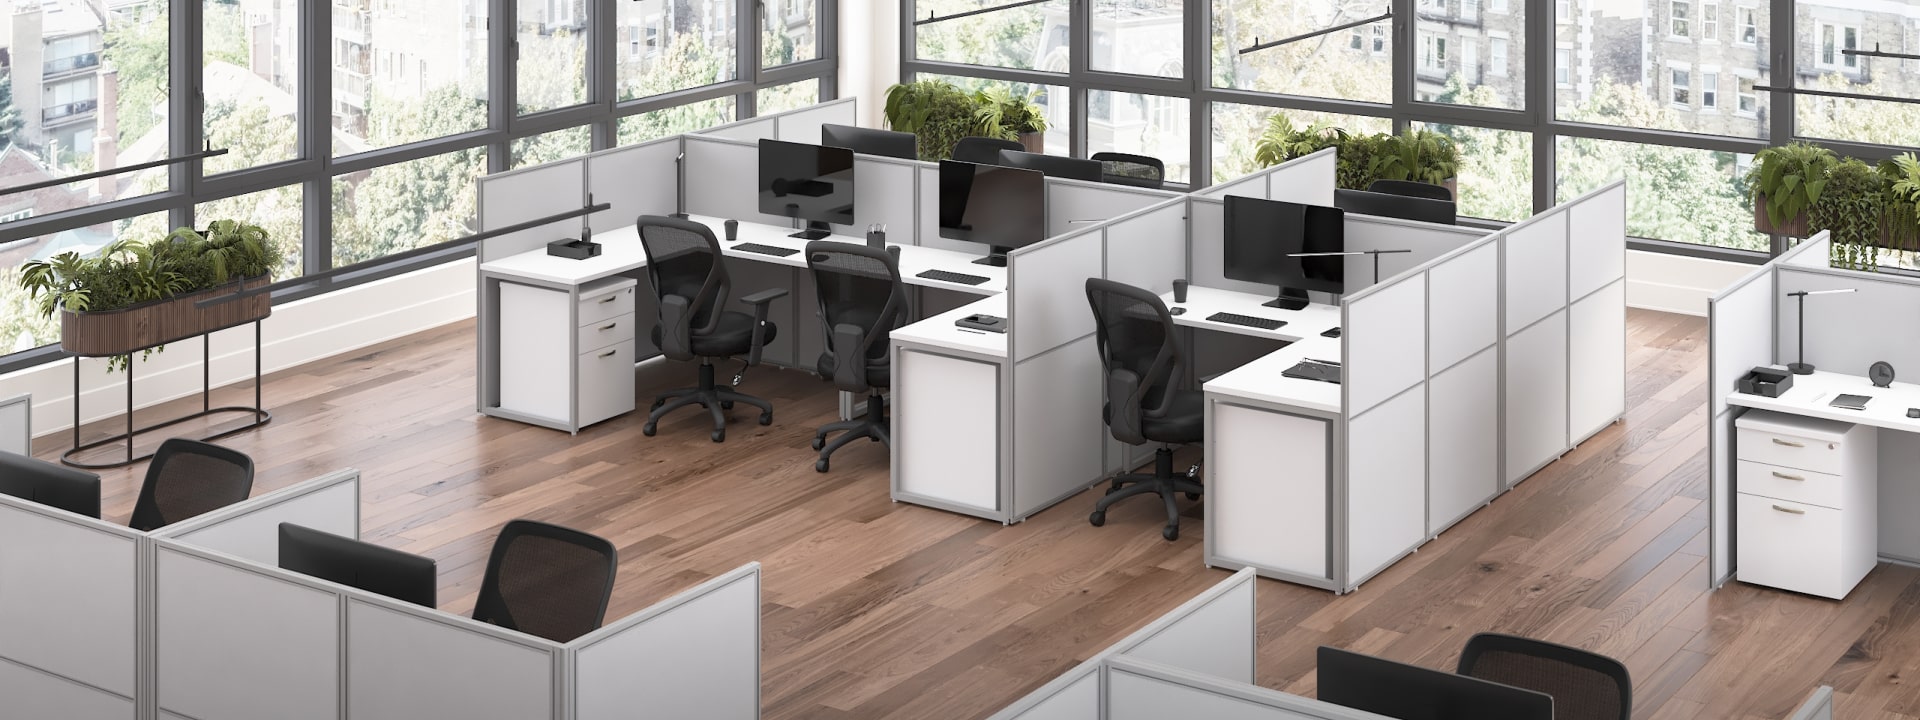 Commercial Office Desks